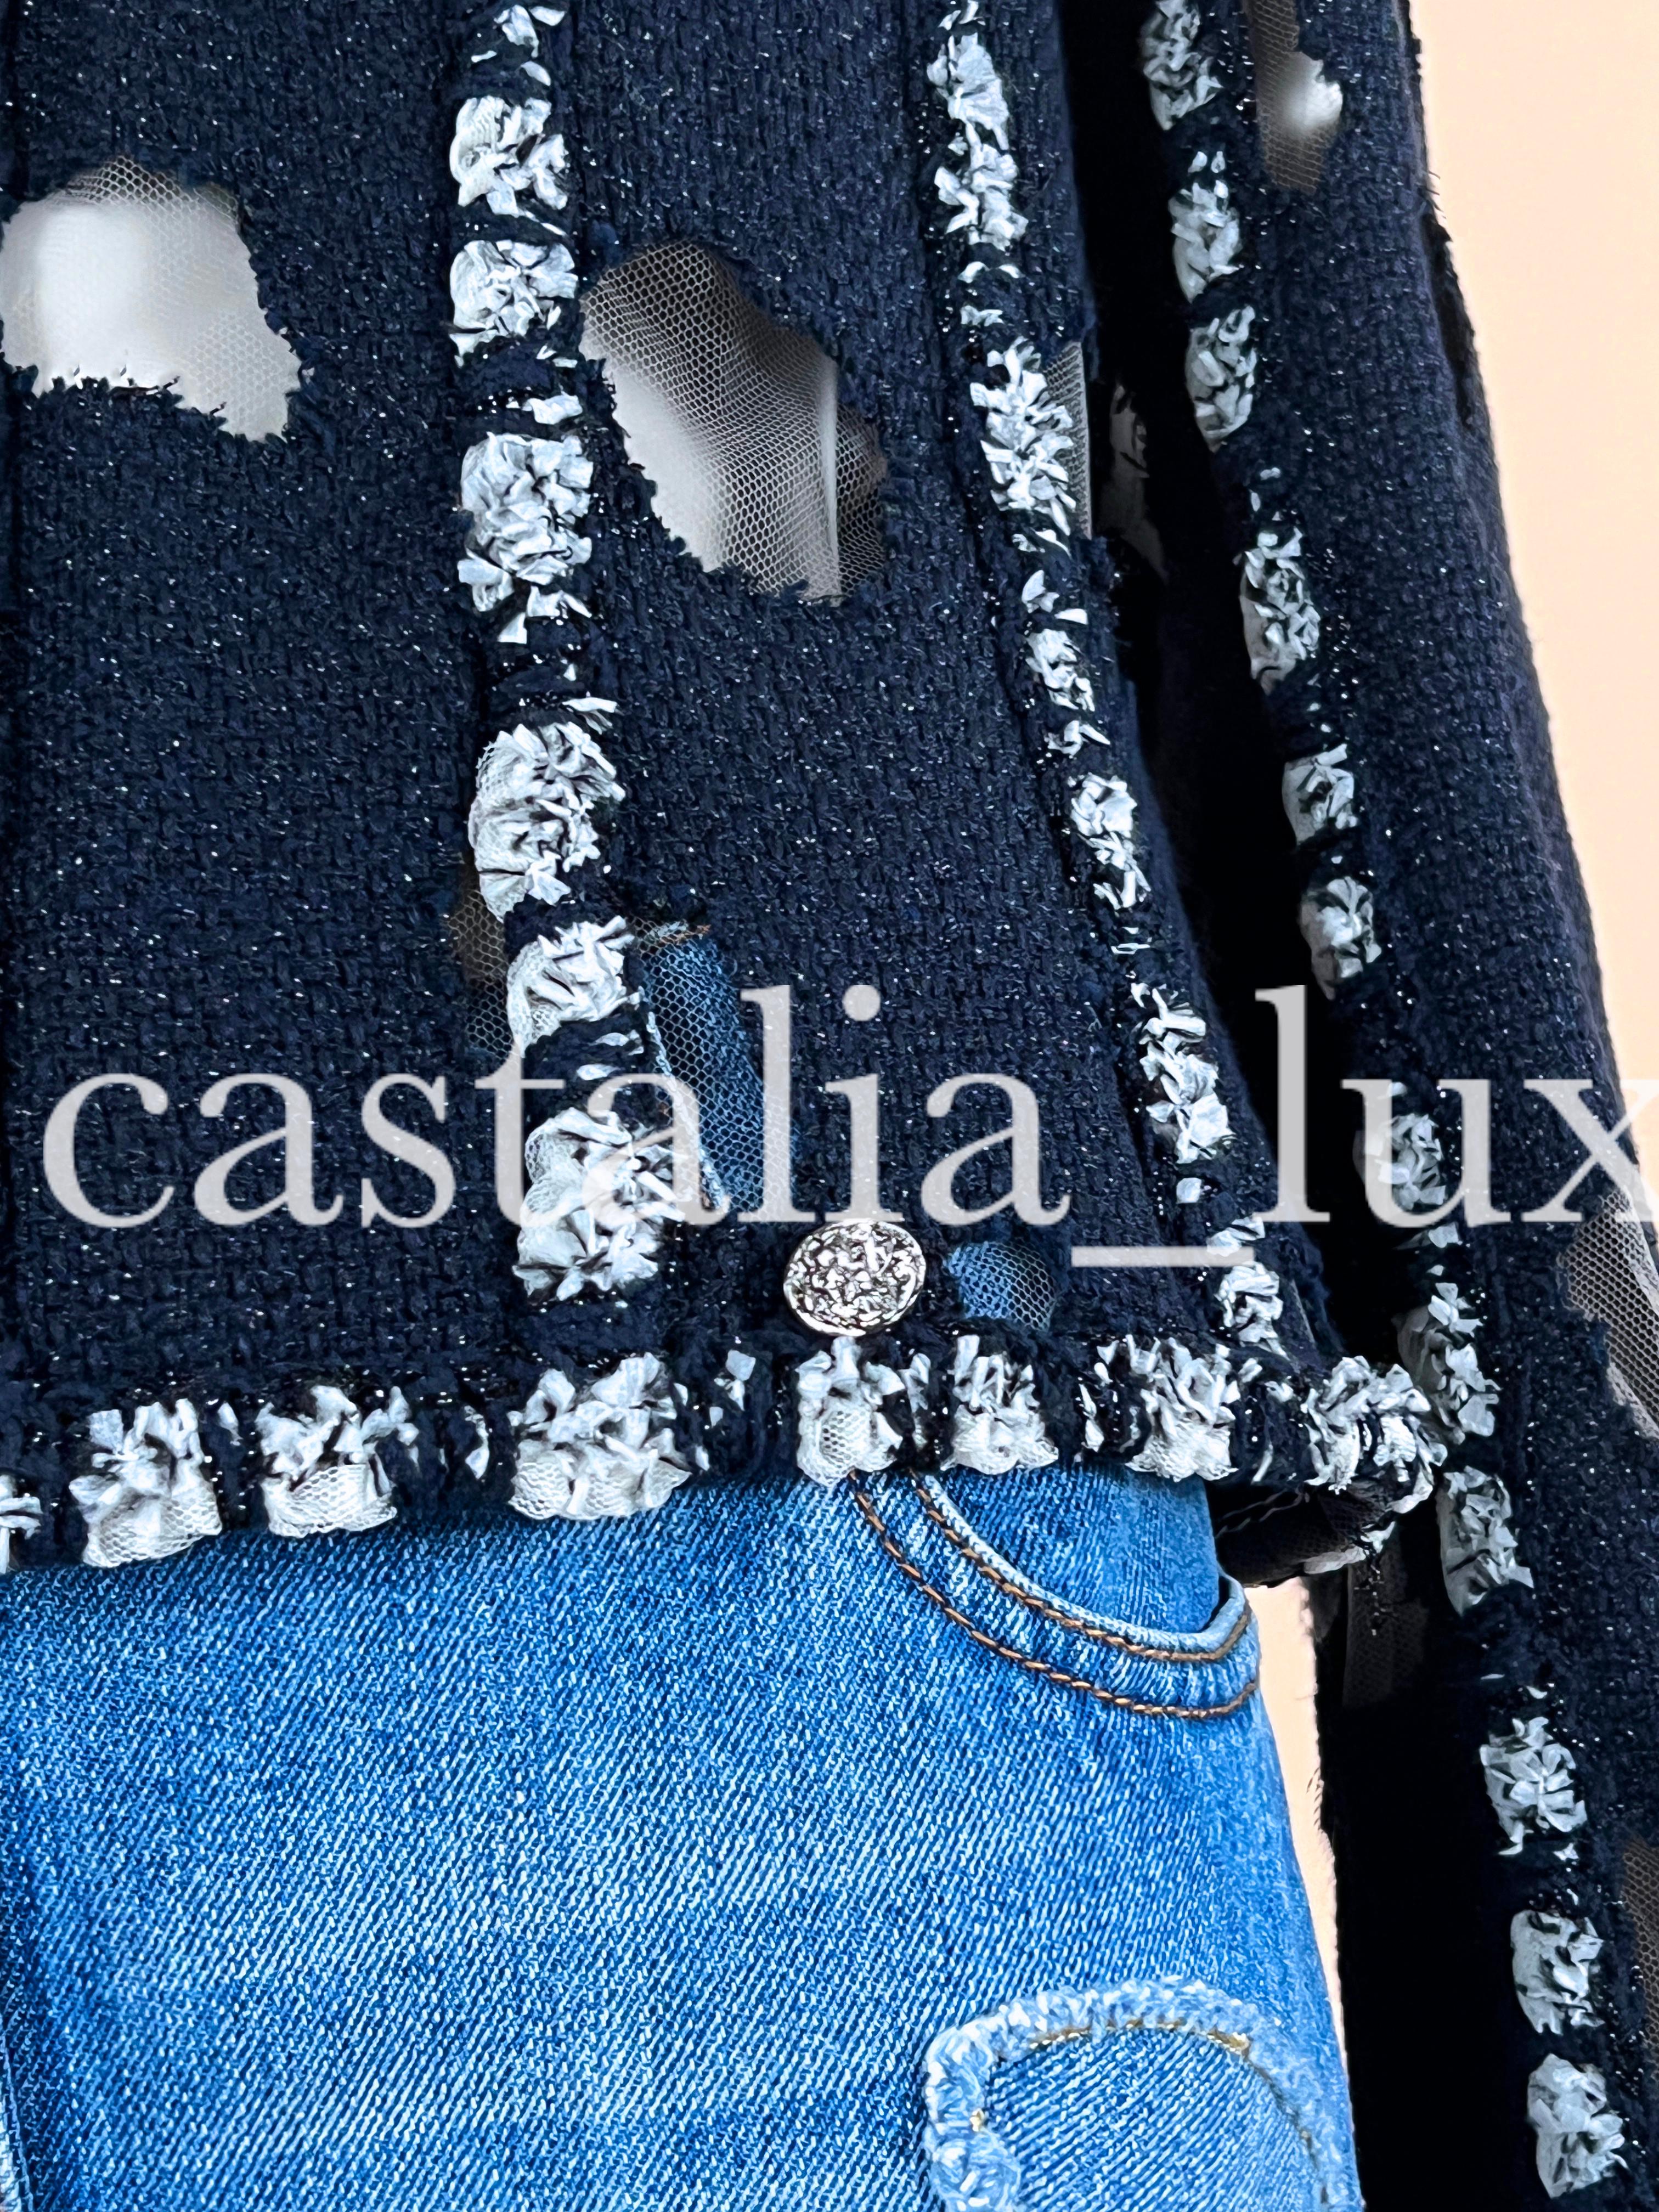 Chanel Iconic Metropolitan Museum Tweed Jacket For Sale 10